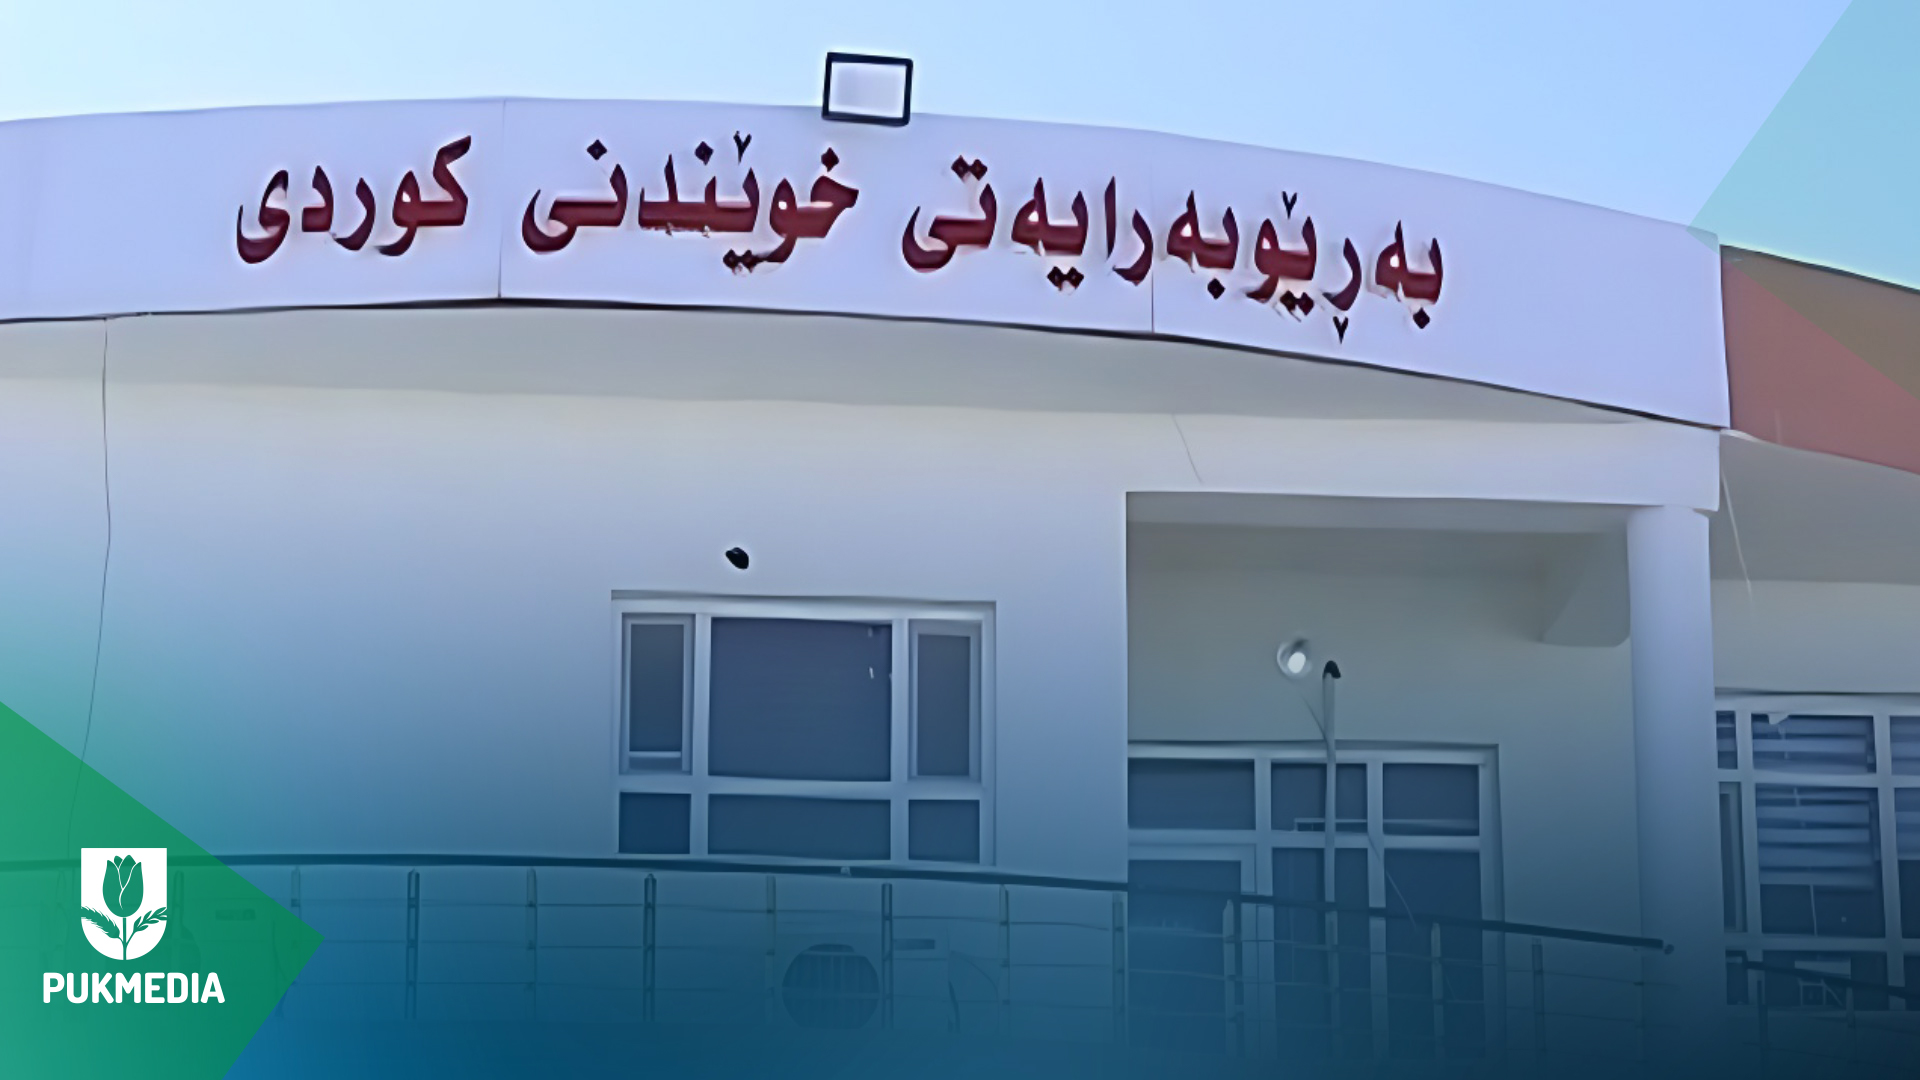  Kurdish Education Directorate in Kirkuk.